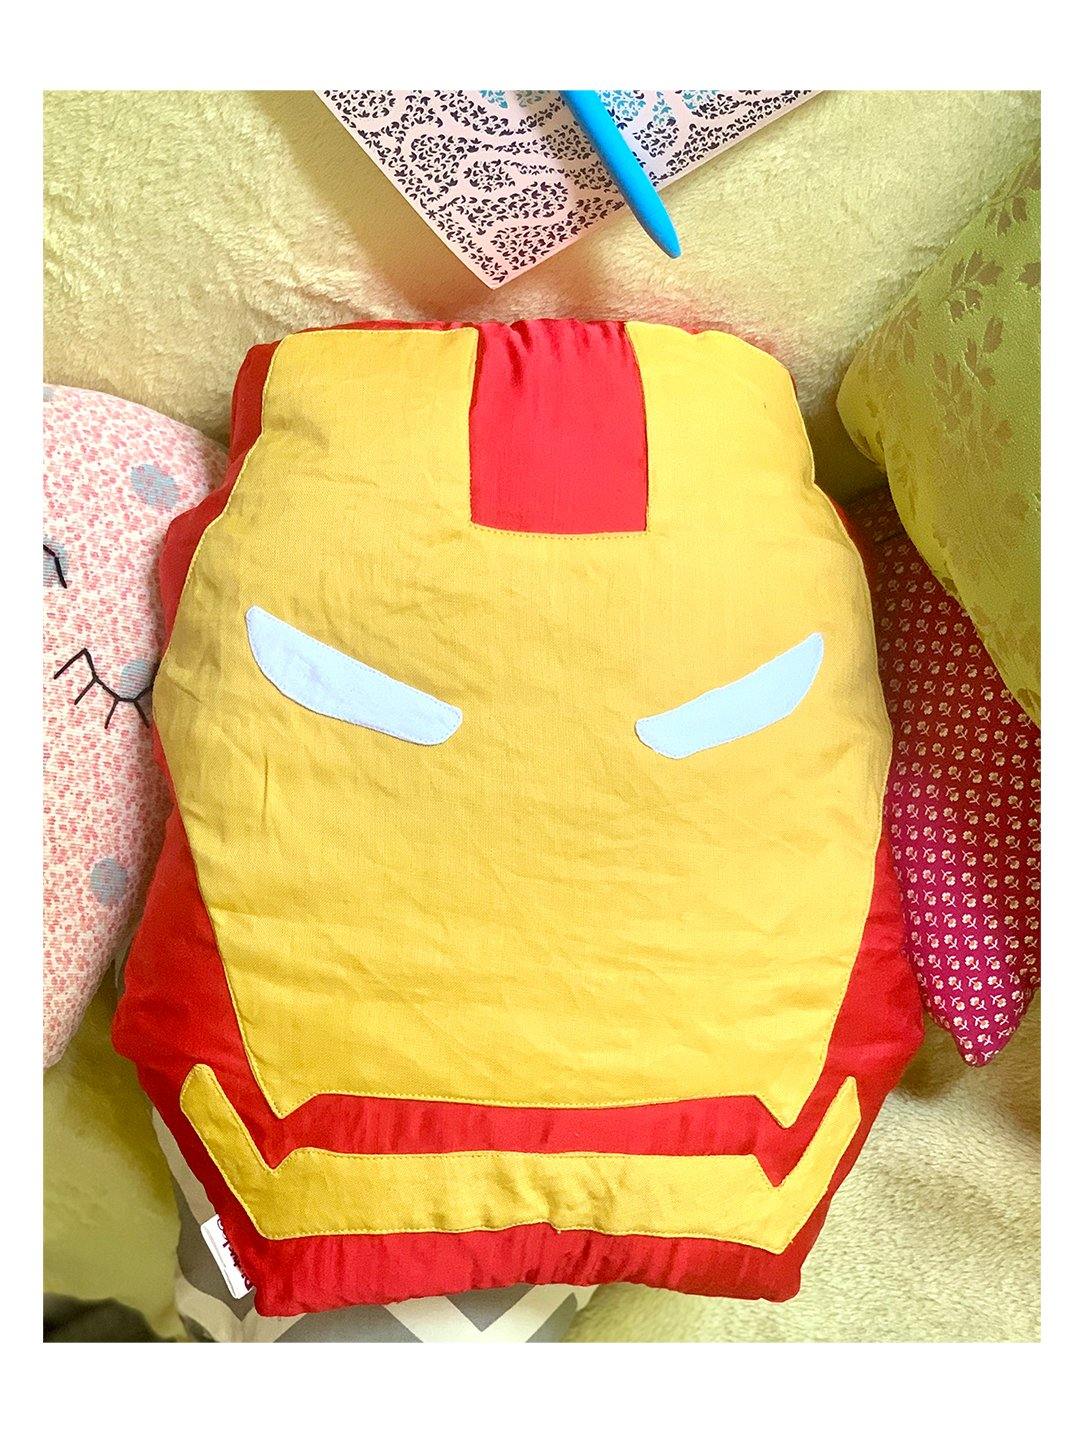 Ironman Cushion - image - 1